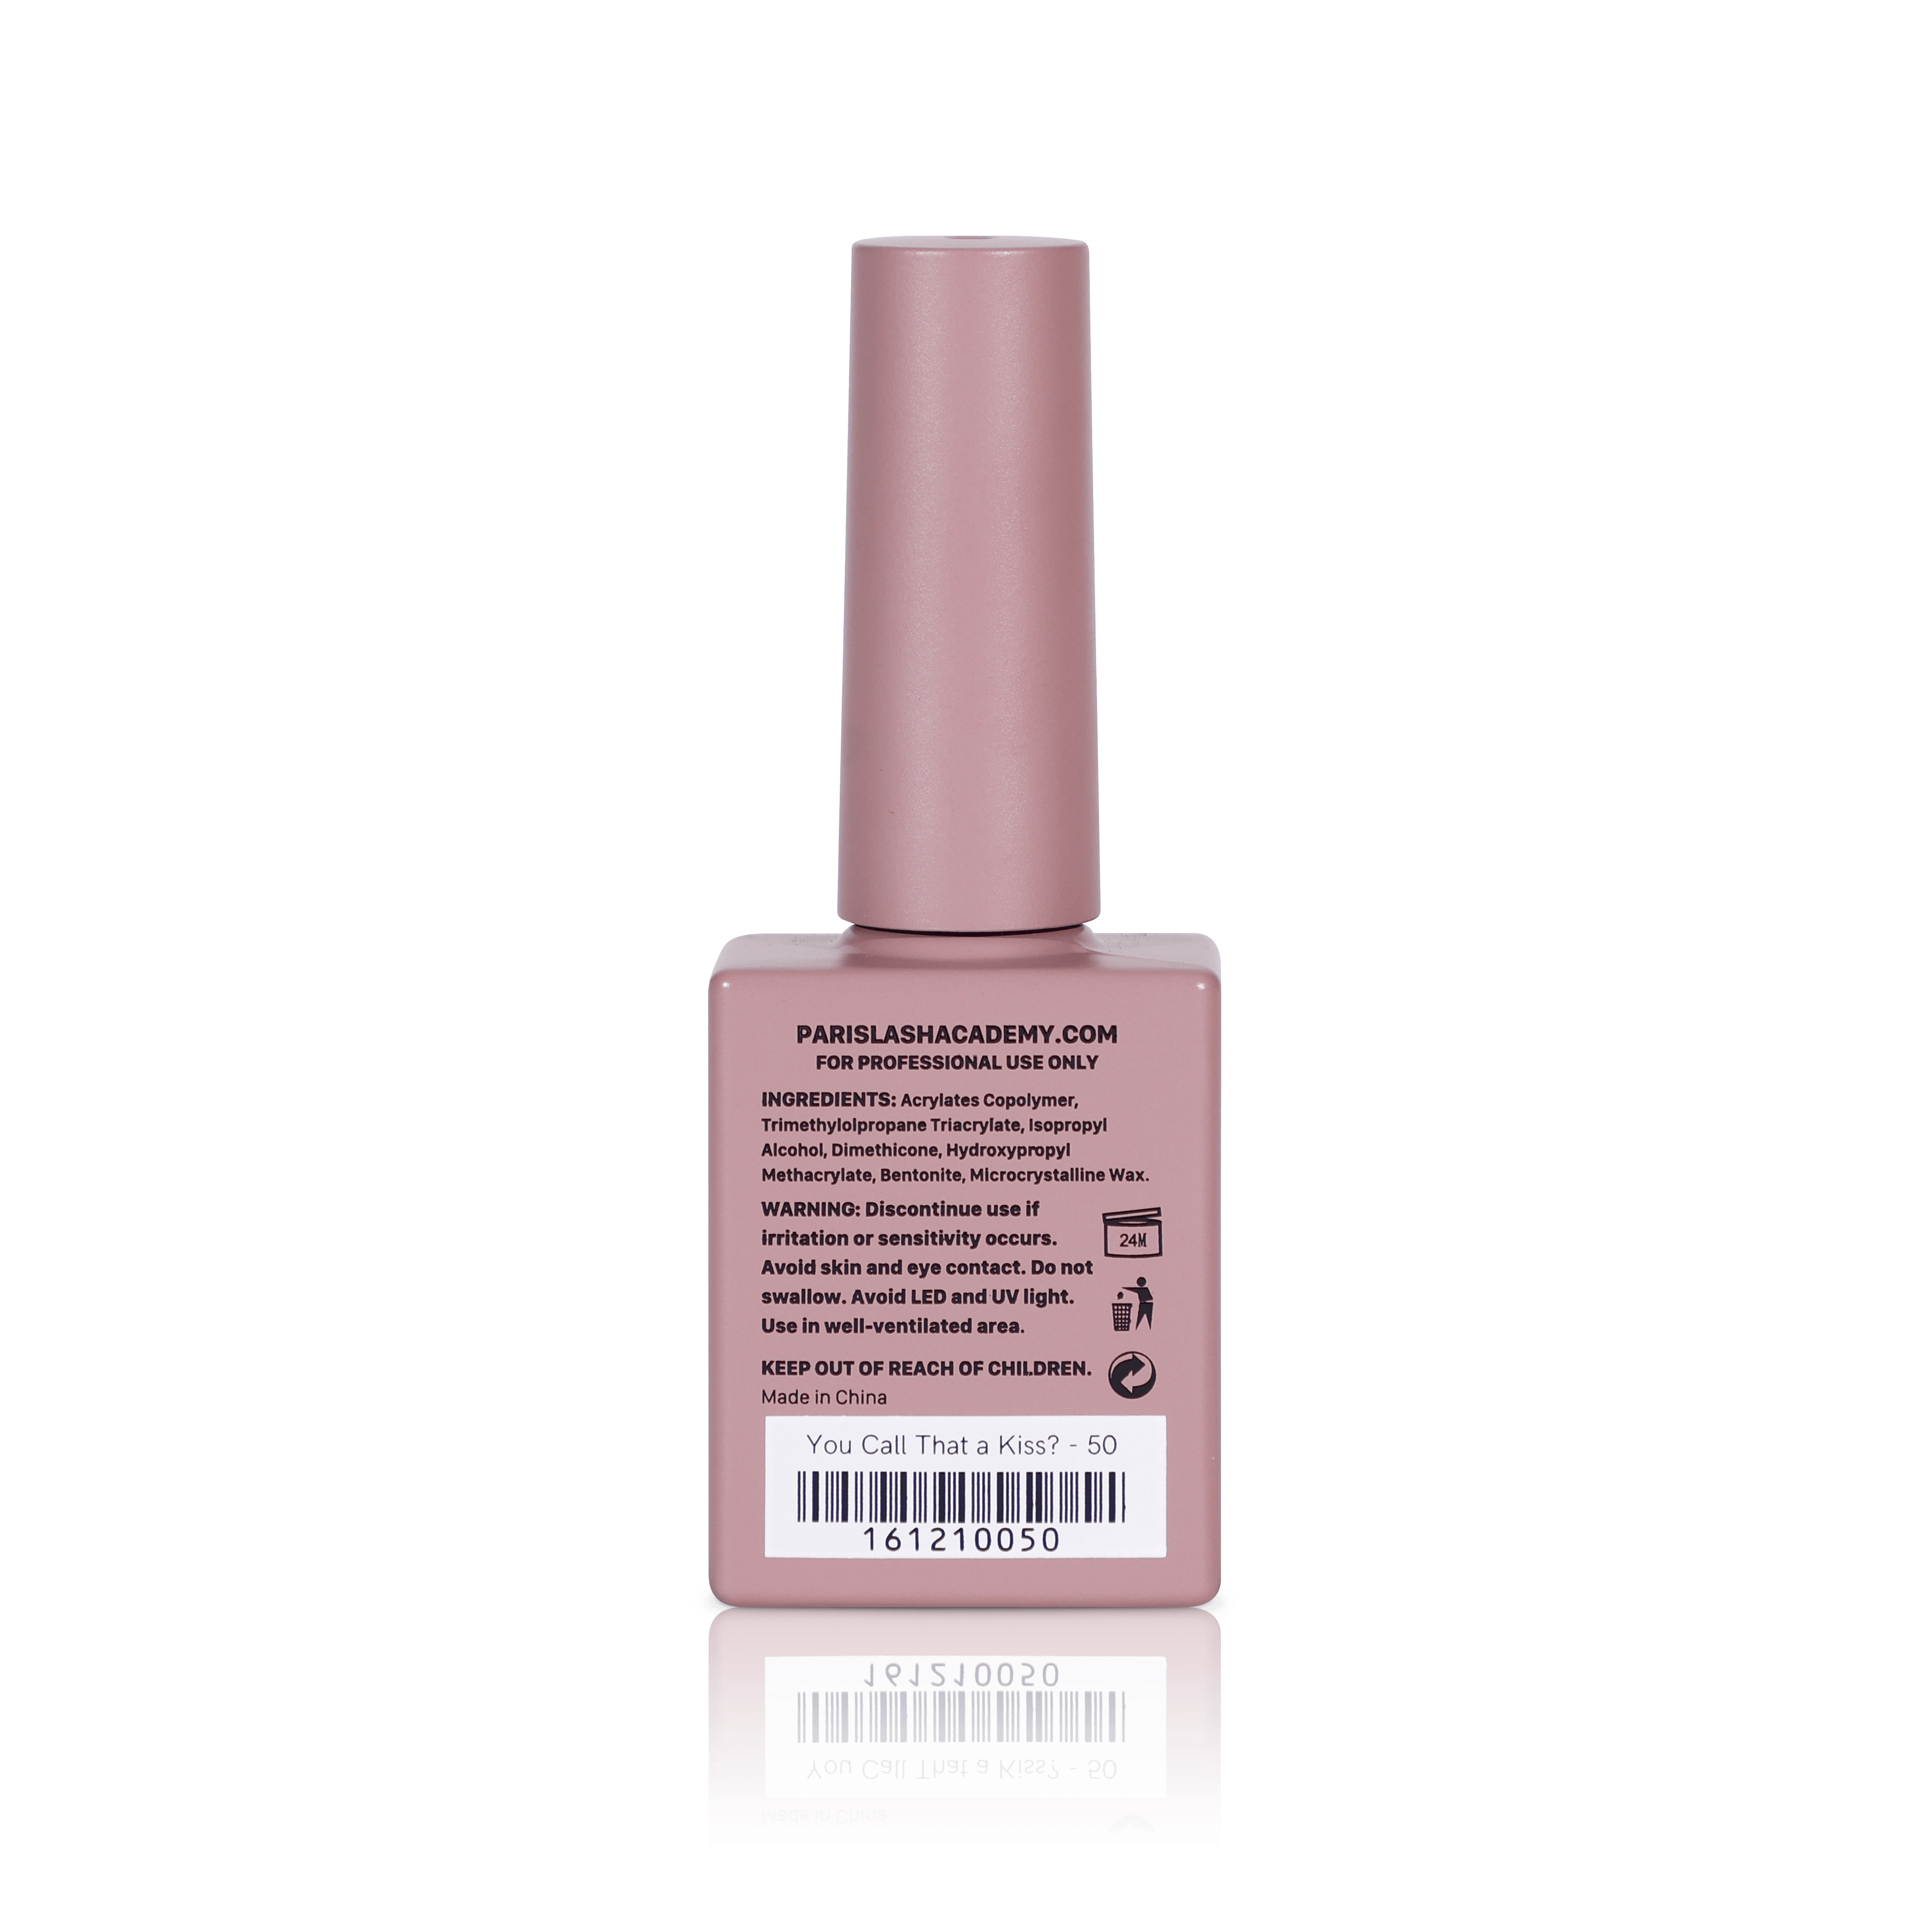 NEW Sinful Colors Professional Nail Polish 100+ HTF Shades - BUY 1 GET 1 50%  OFF | eBay